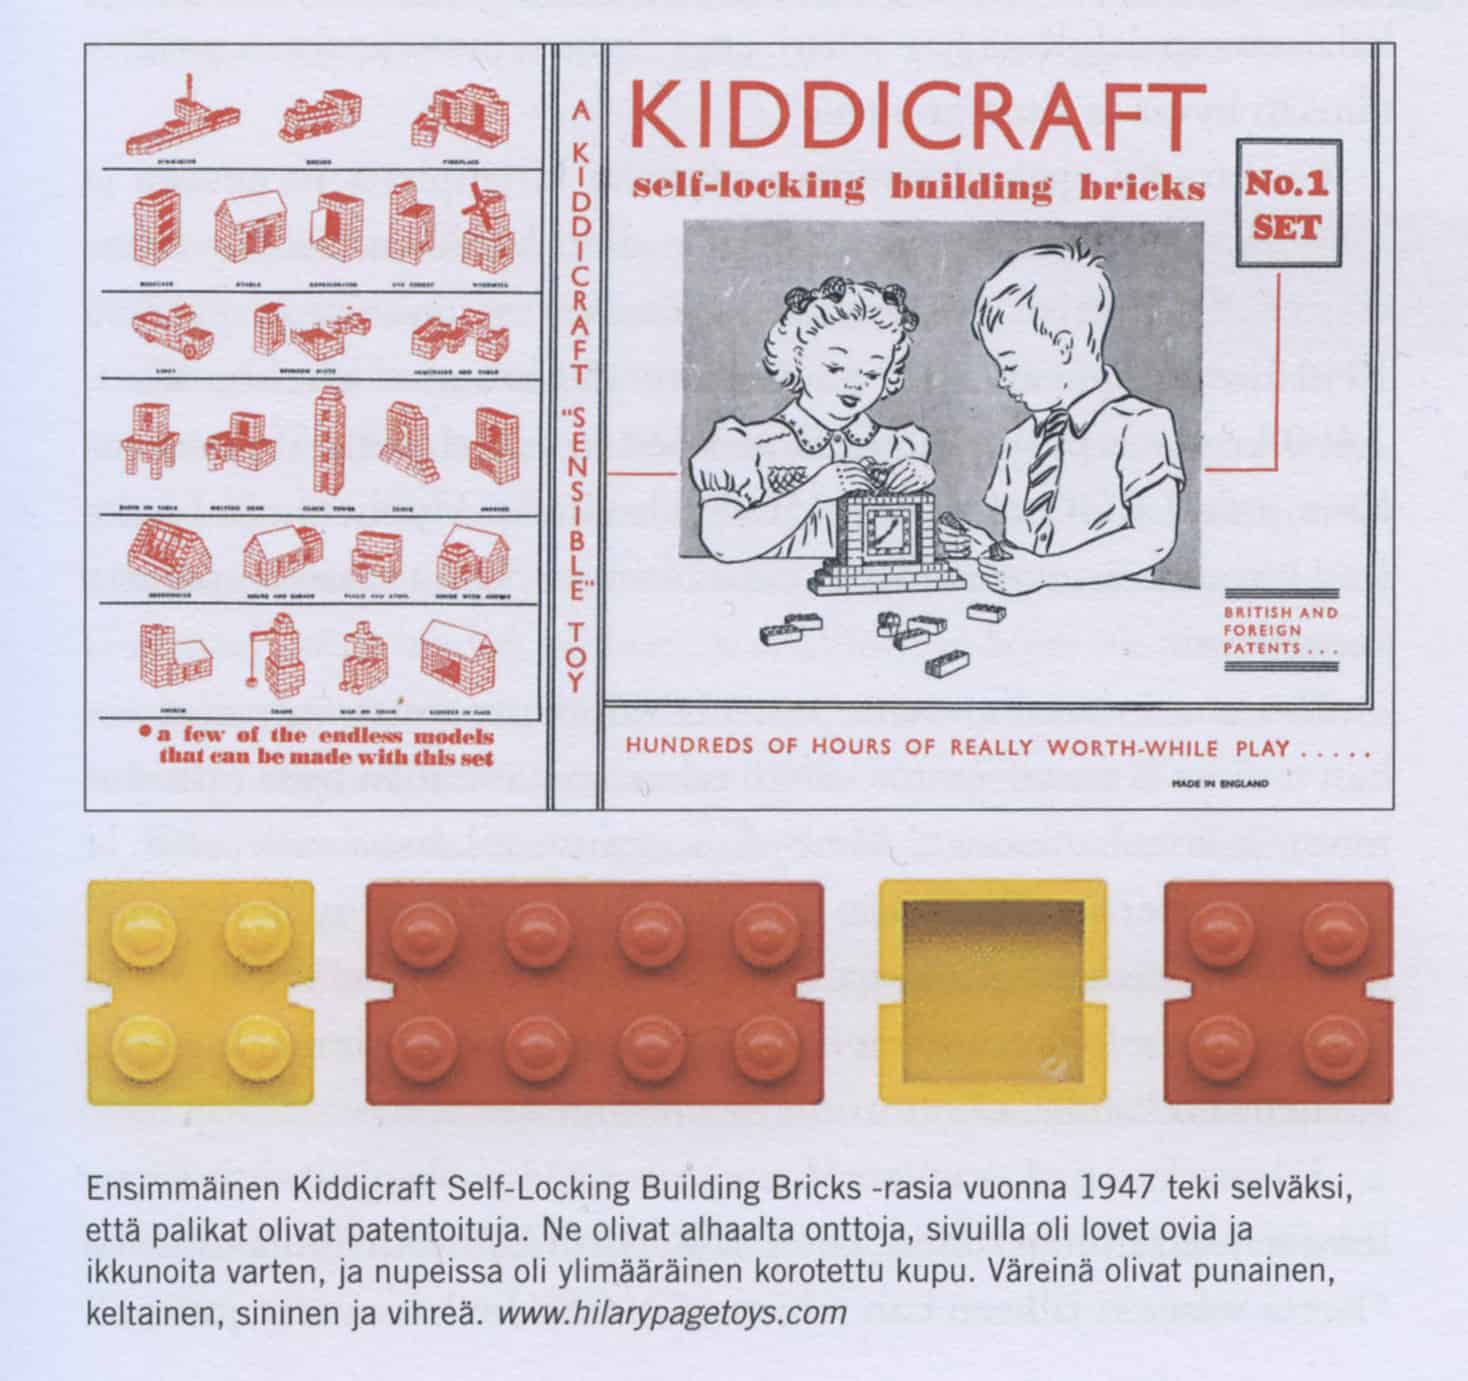 Kiddicraftin Self-locking Building Bricks -paketti.